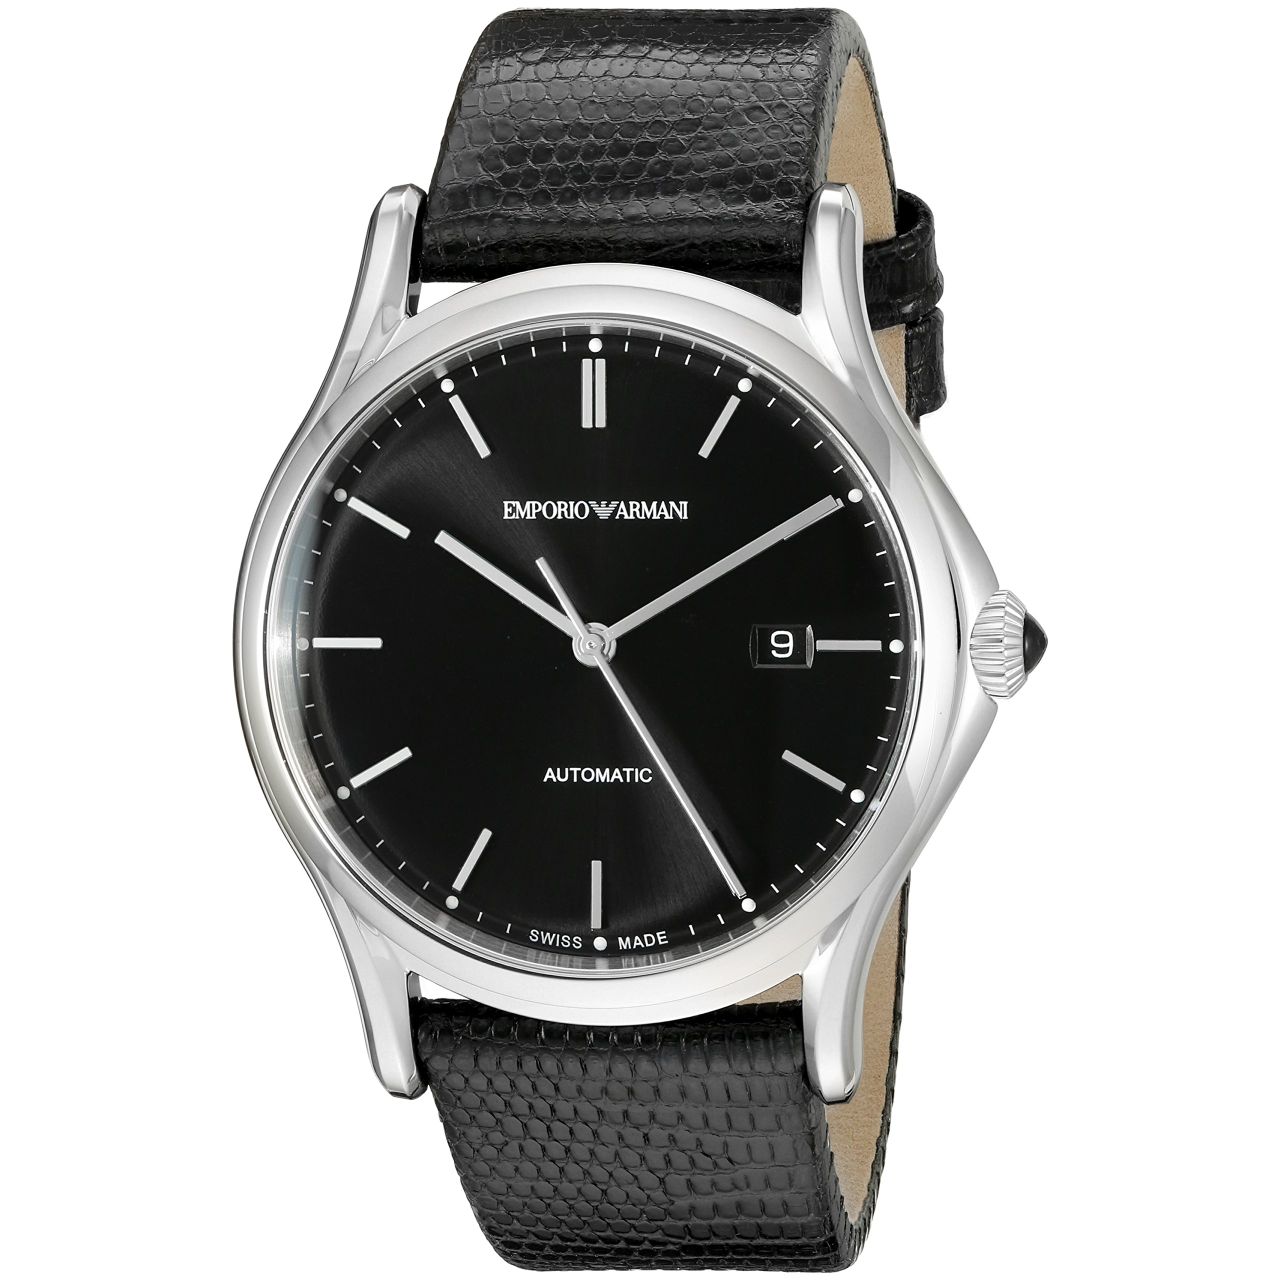 Emporio Armani ARS3001 Mens Black Dial Analog Quartz Watch with Leather Strap